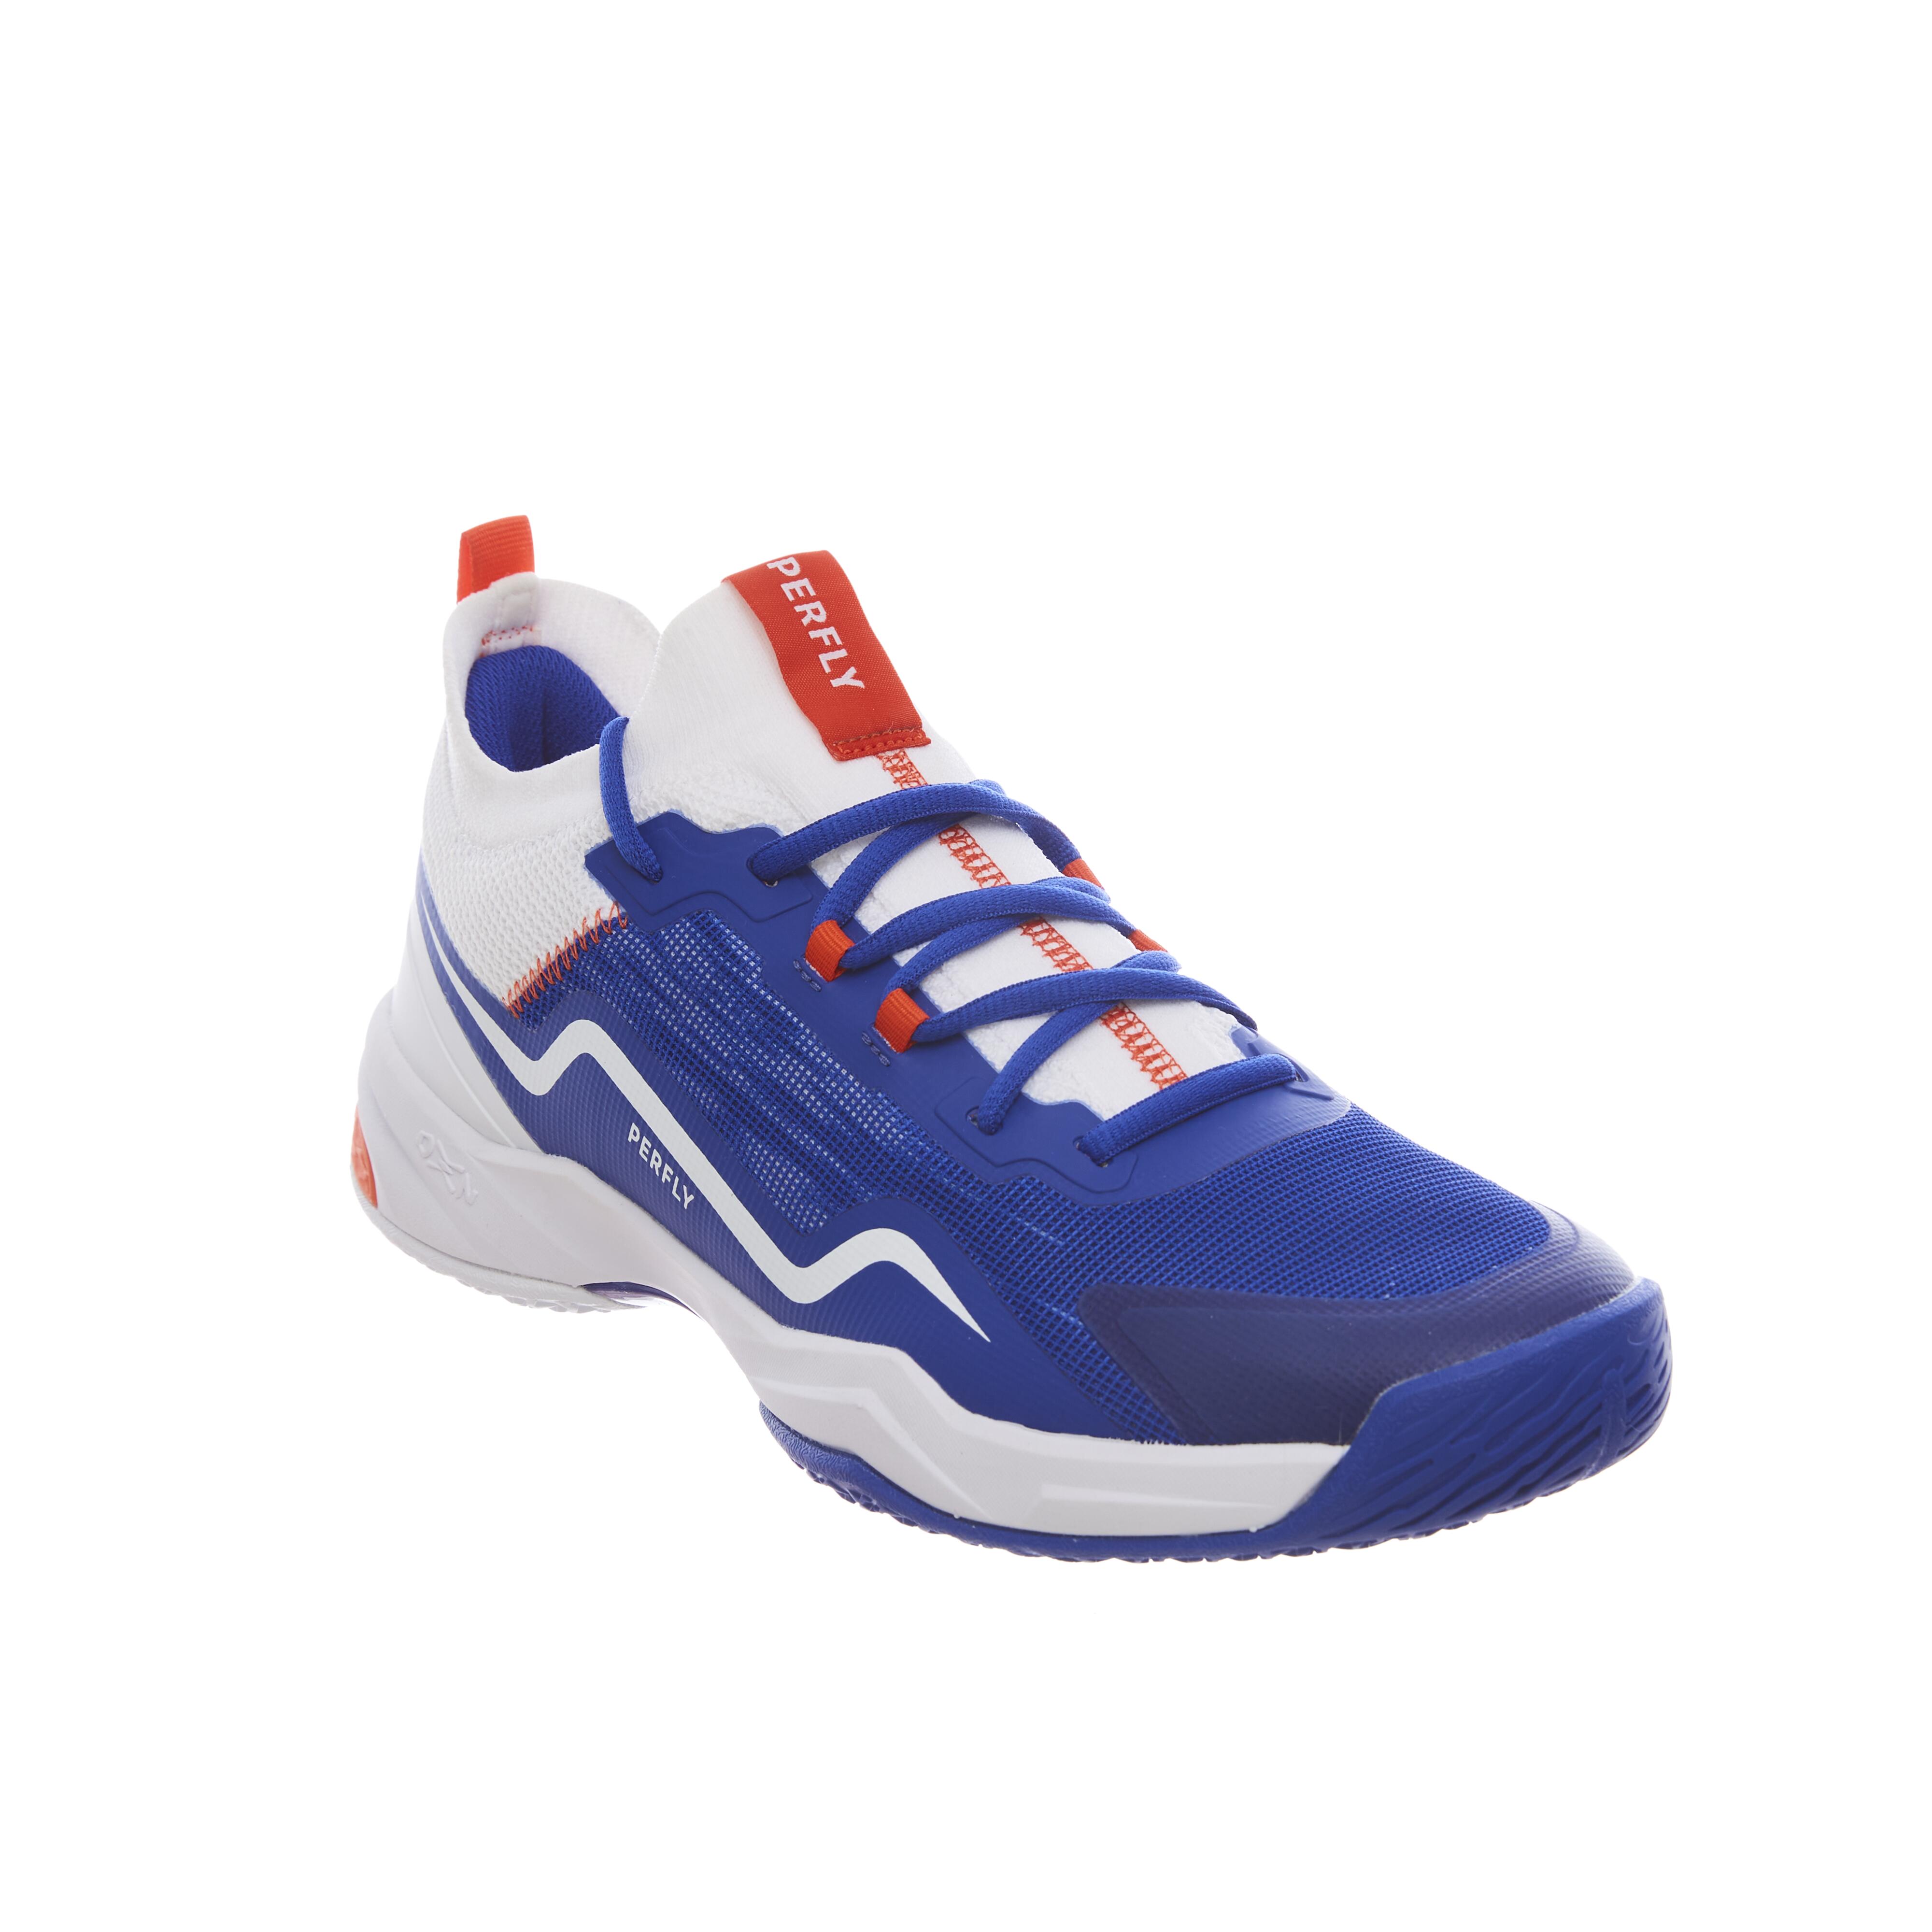 chaussures de badminton homme bs 900 ultra lite - bleu/blanc - perfly